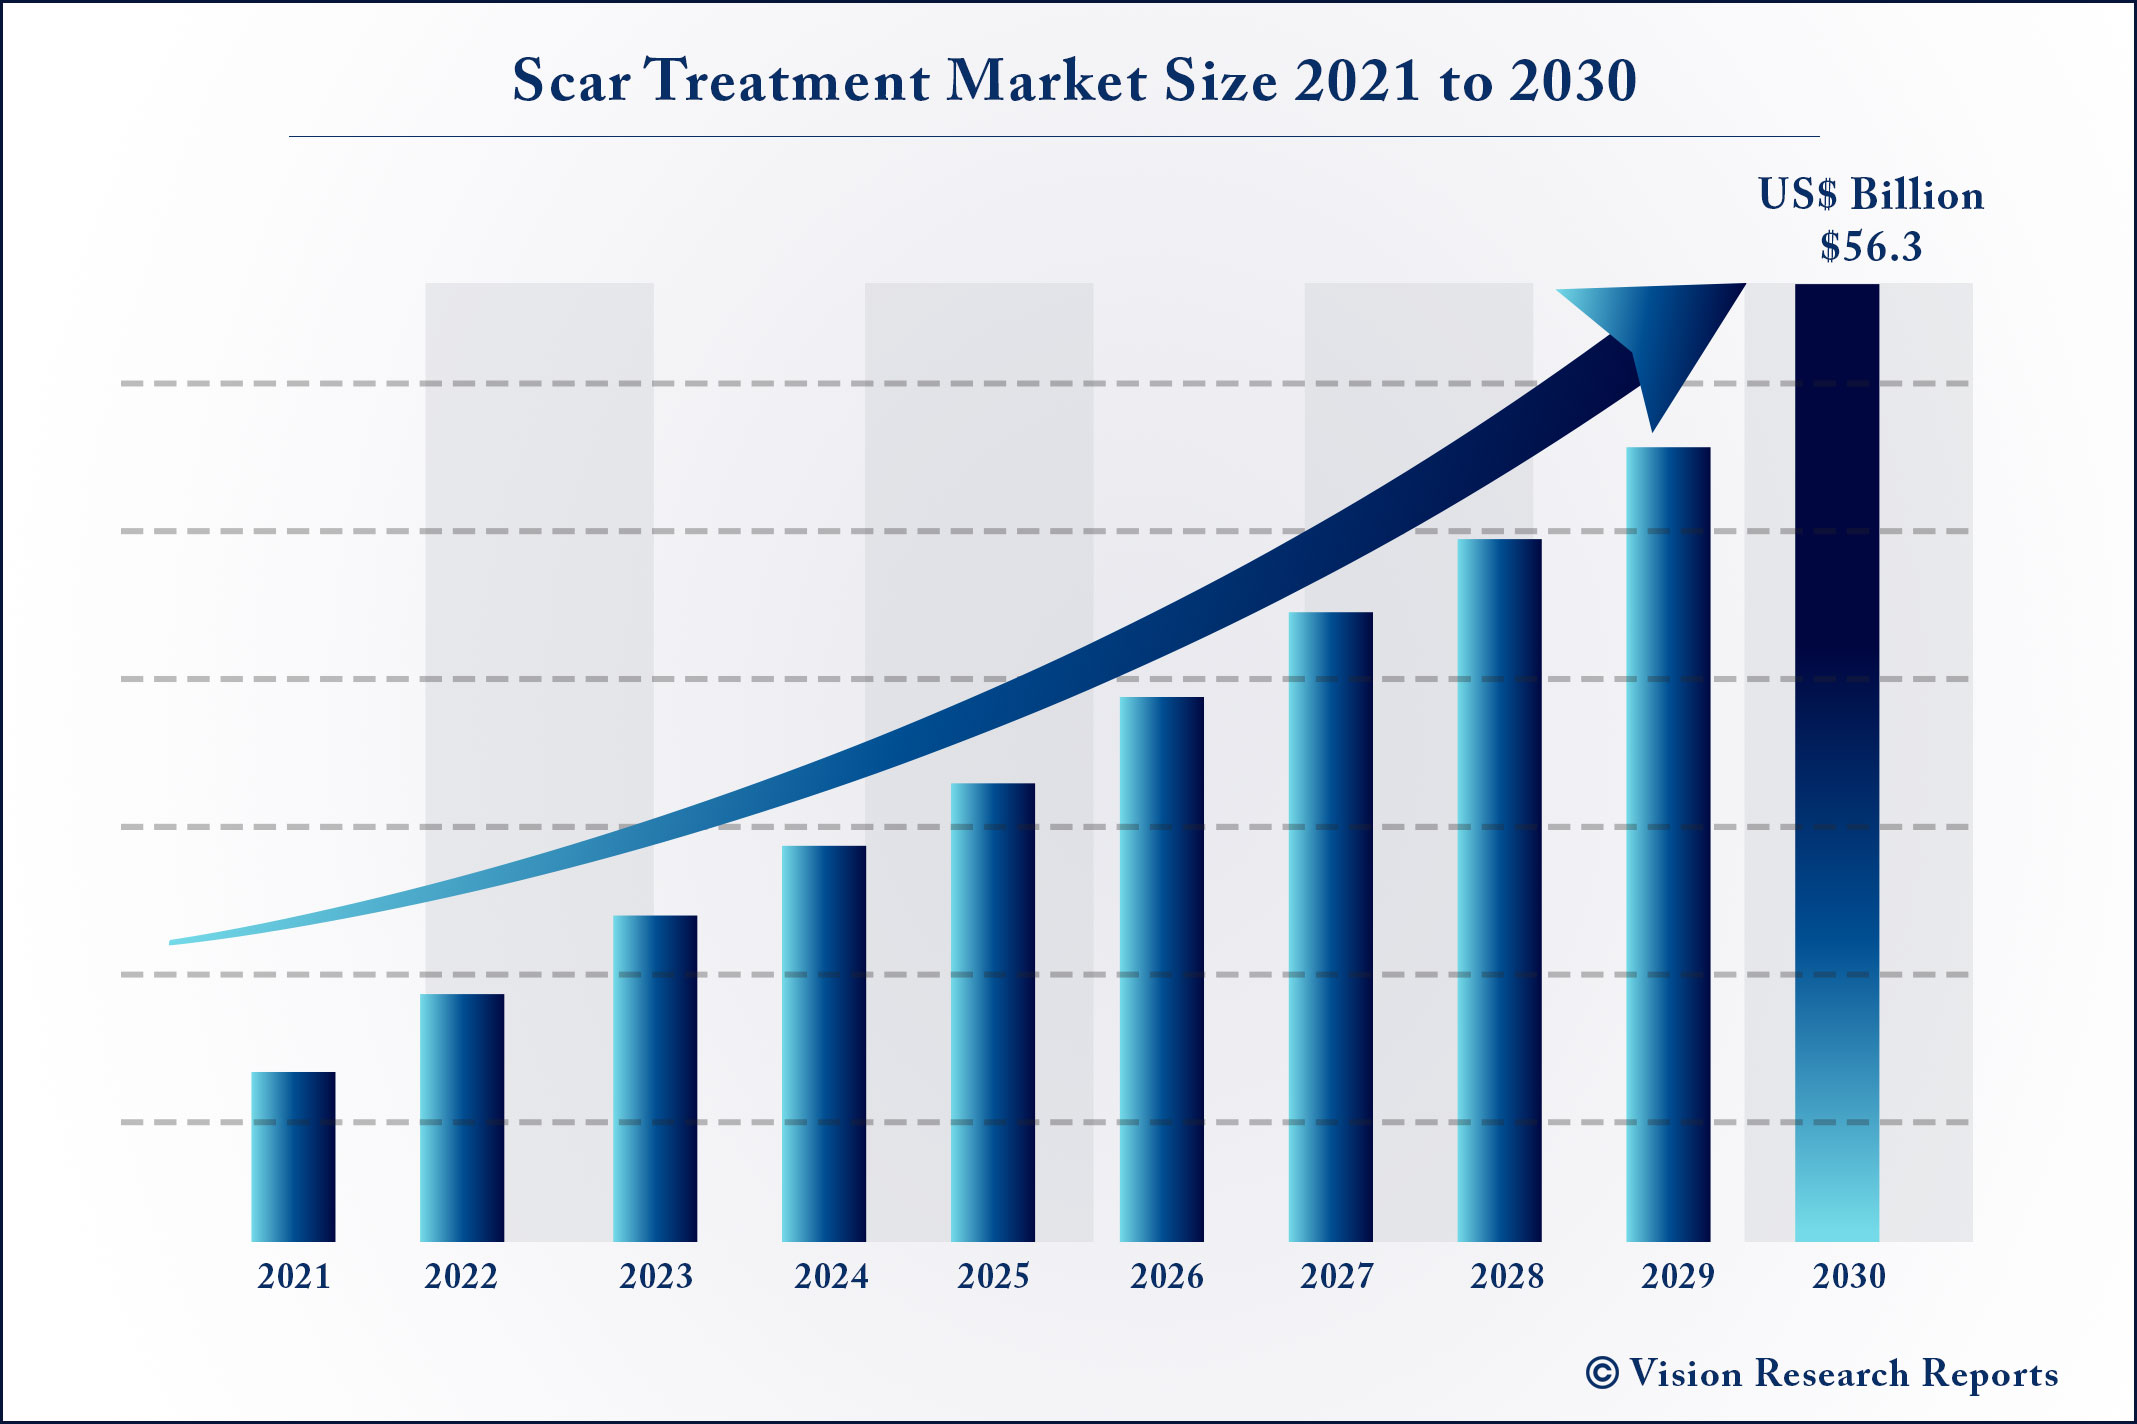 Scar Treatment Market Size 2021 to 2030